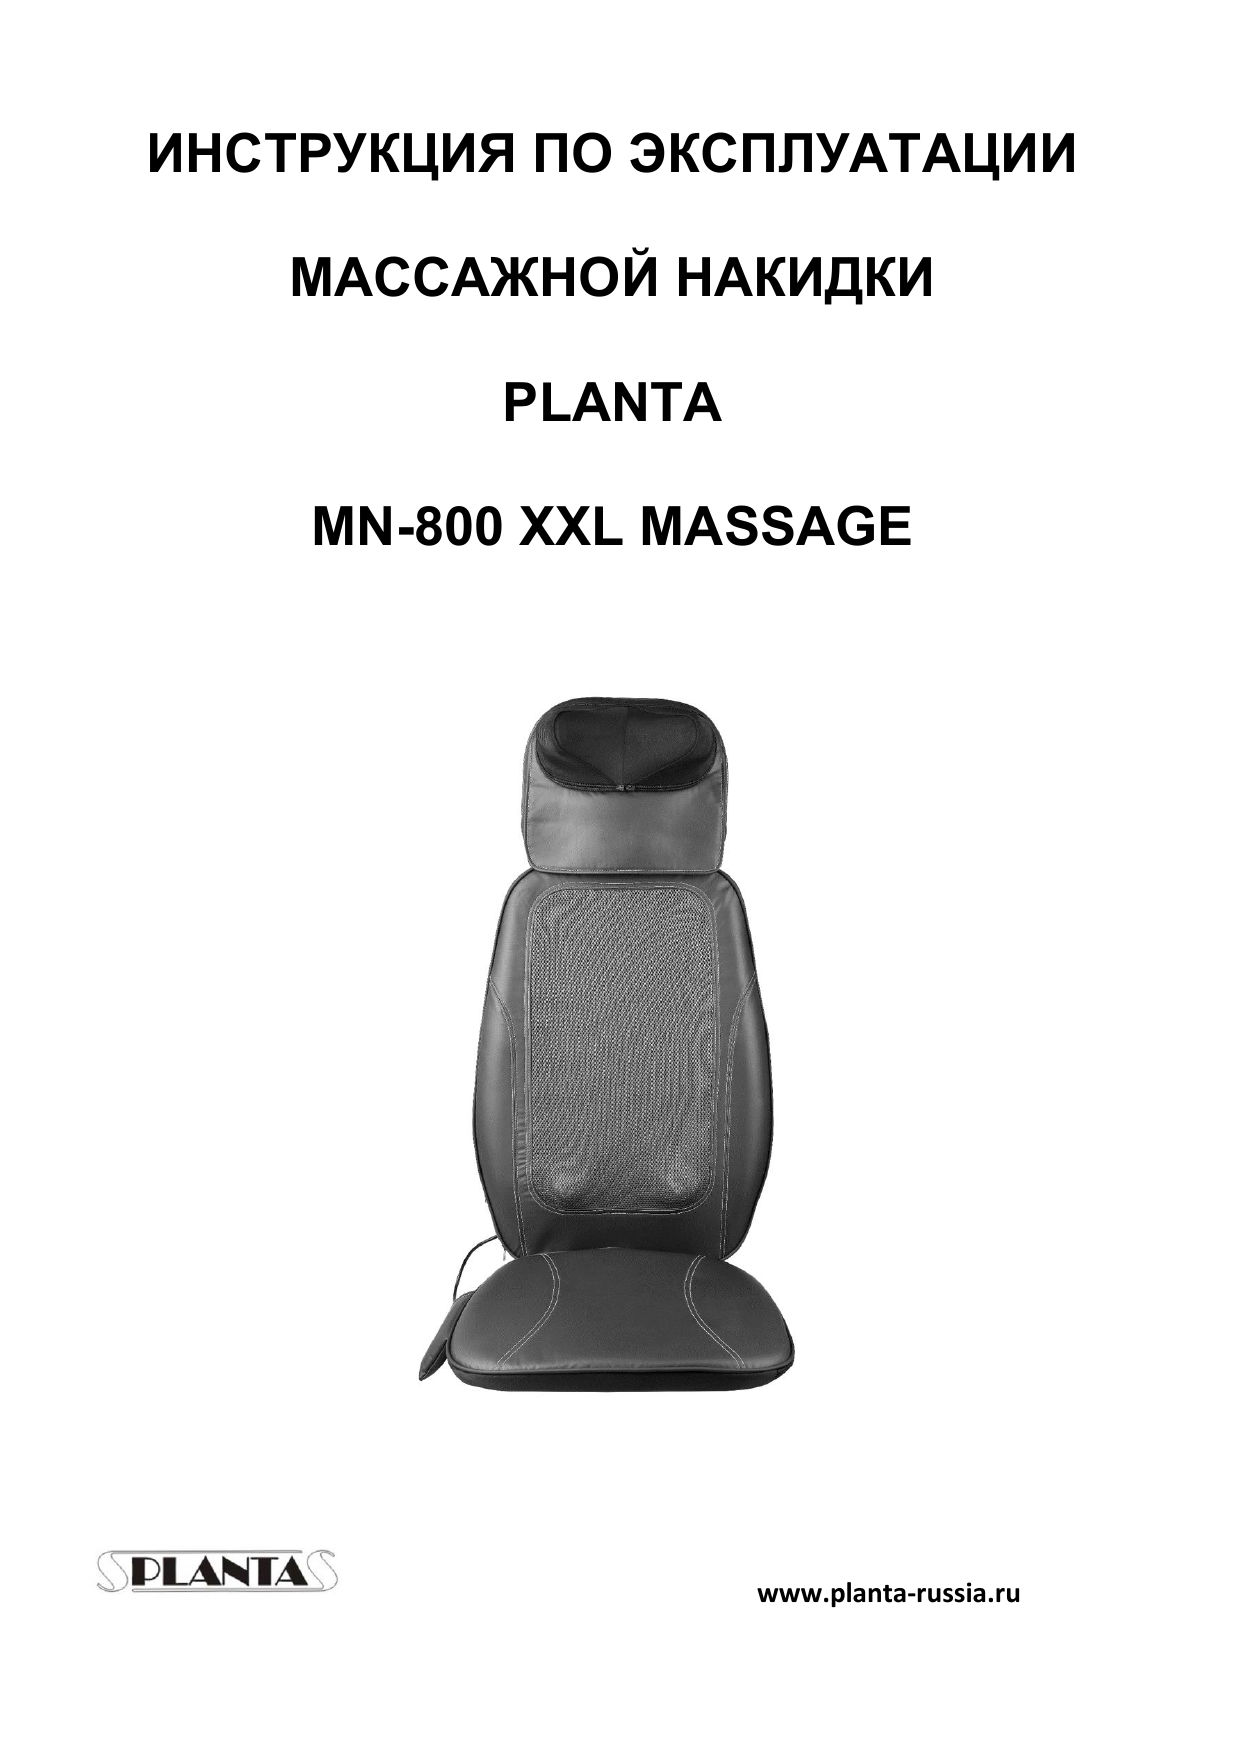 Planta mf 4w massage